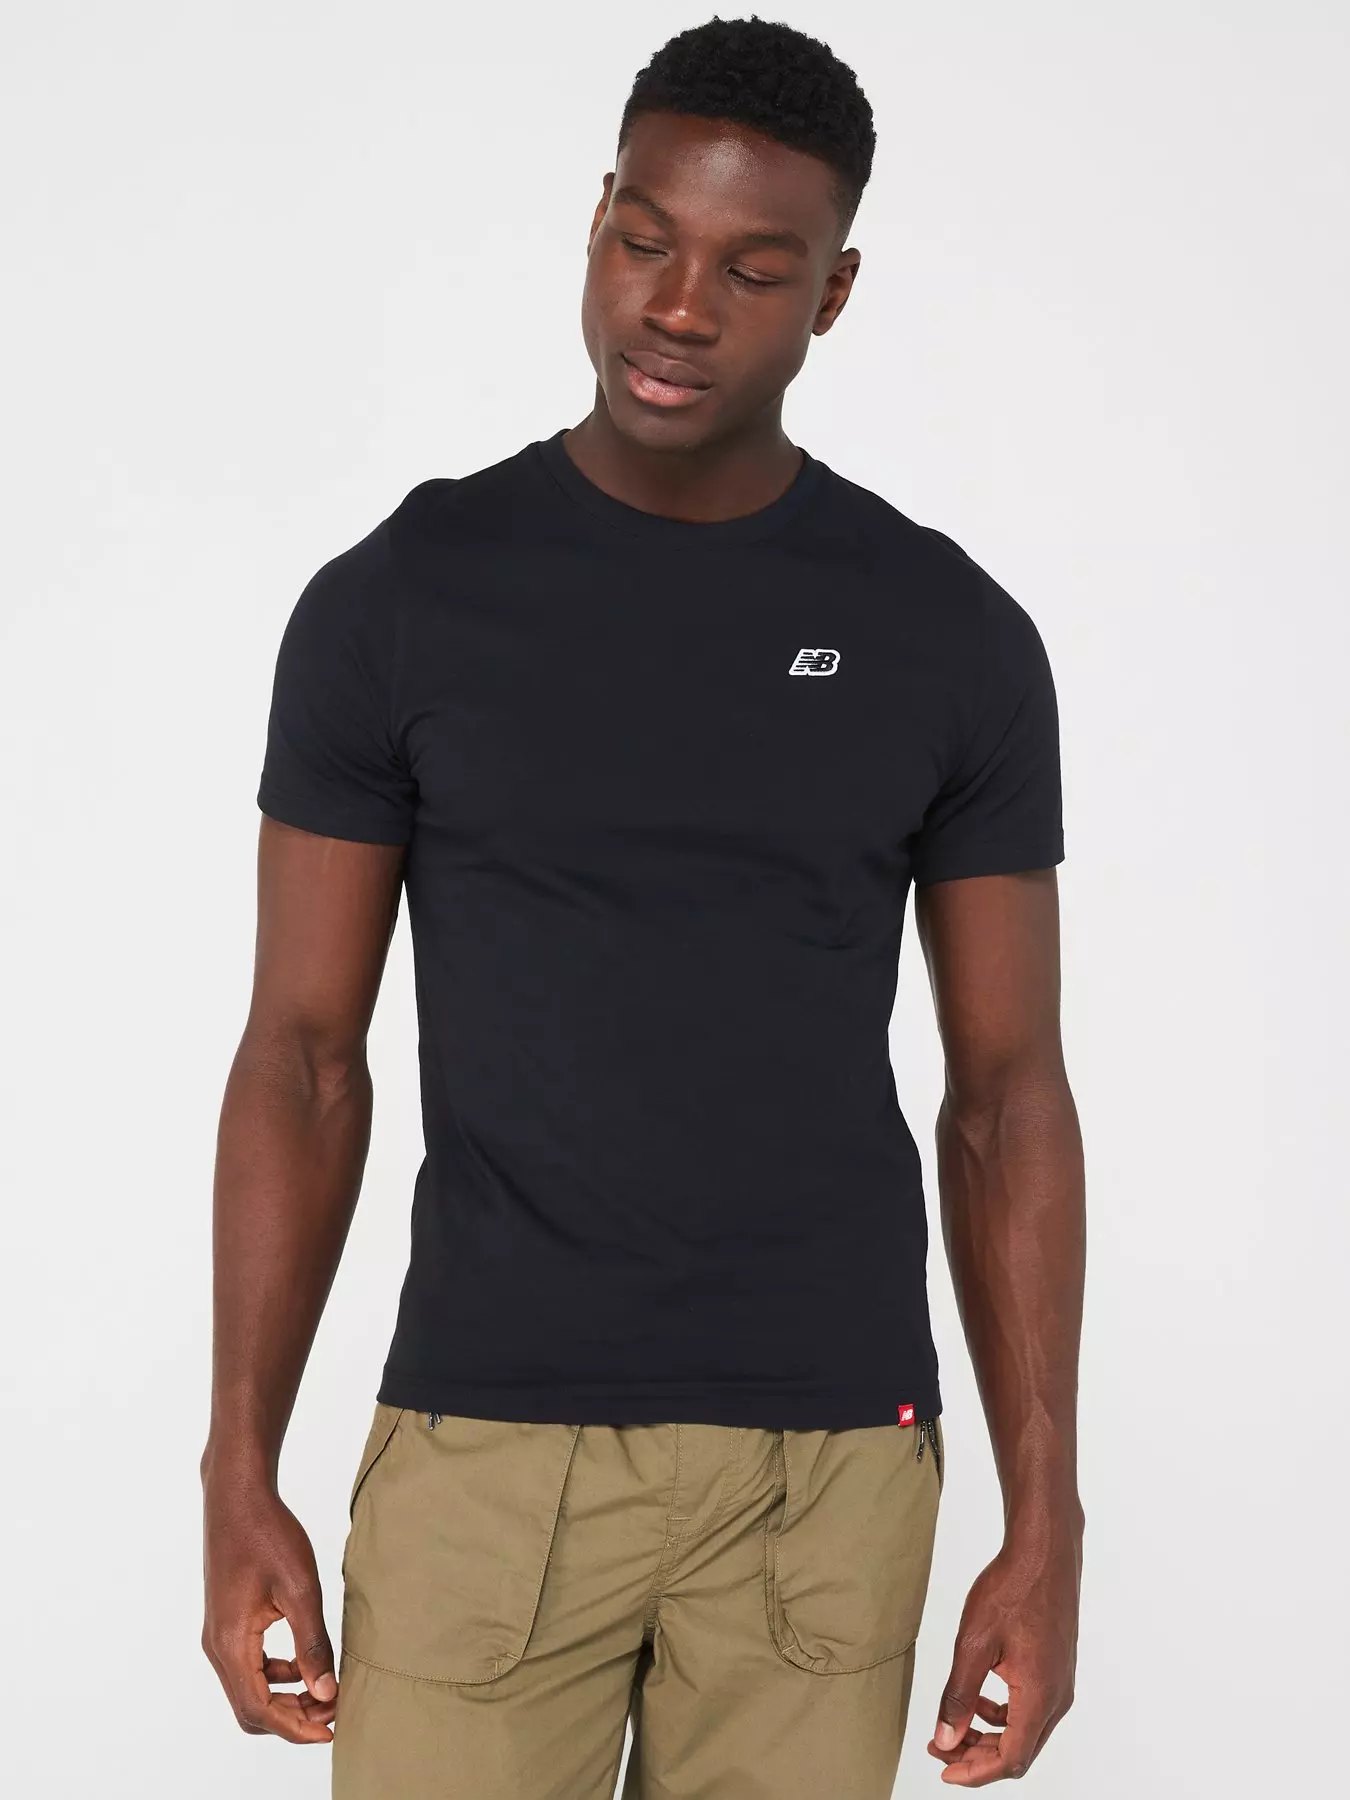 Nike - Sportswear Tech Pack Perforated Stretch-Jersey T-Shirt - Black Nike